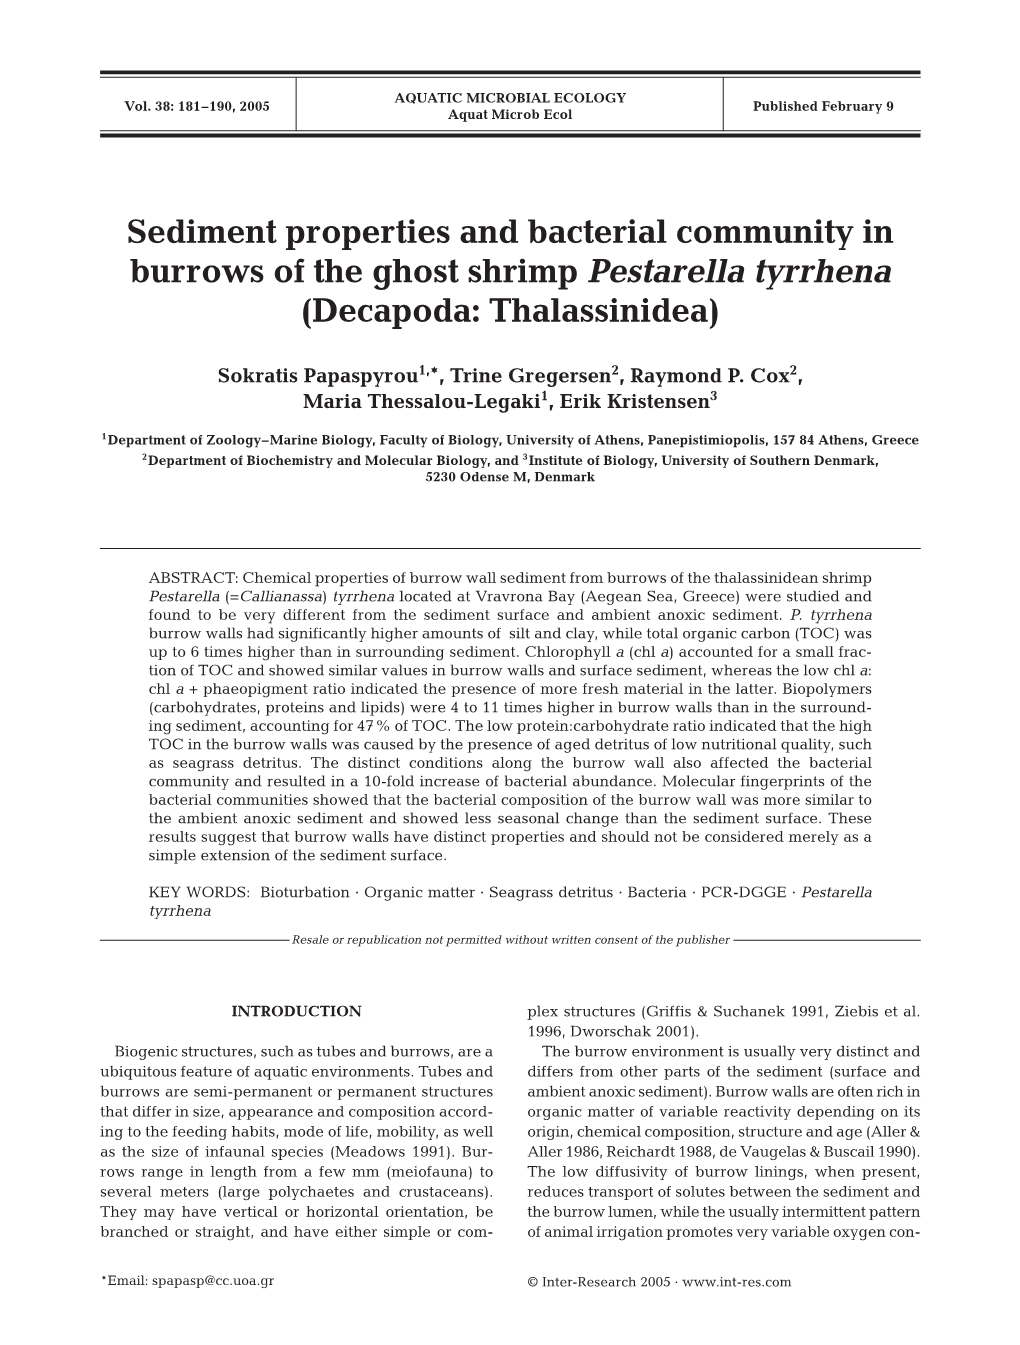 Sediment Properties and Bacterial Community in Burrows of the Ghost Shrimp Pestarella Tyrrhena (Decapoda: Thalassinidea)